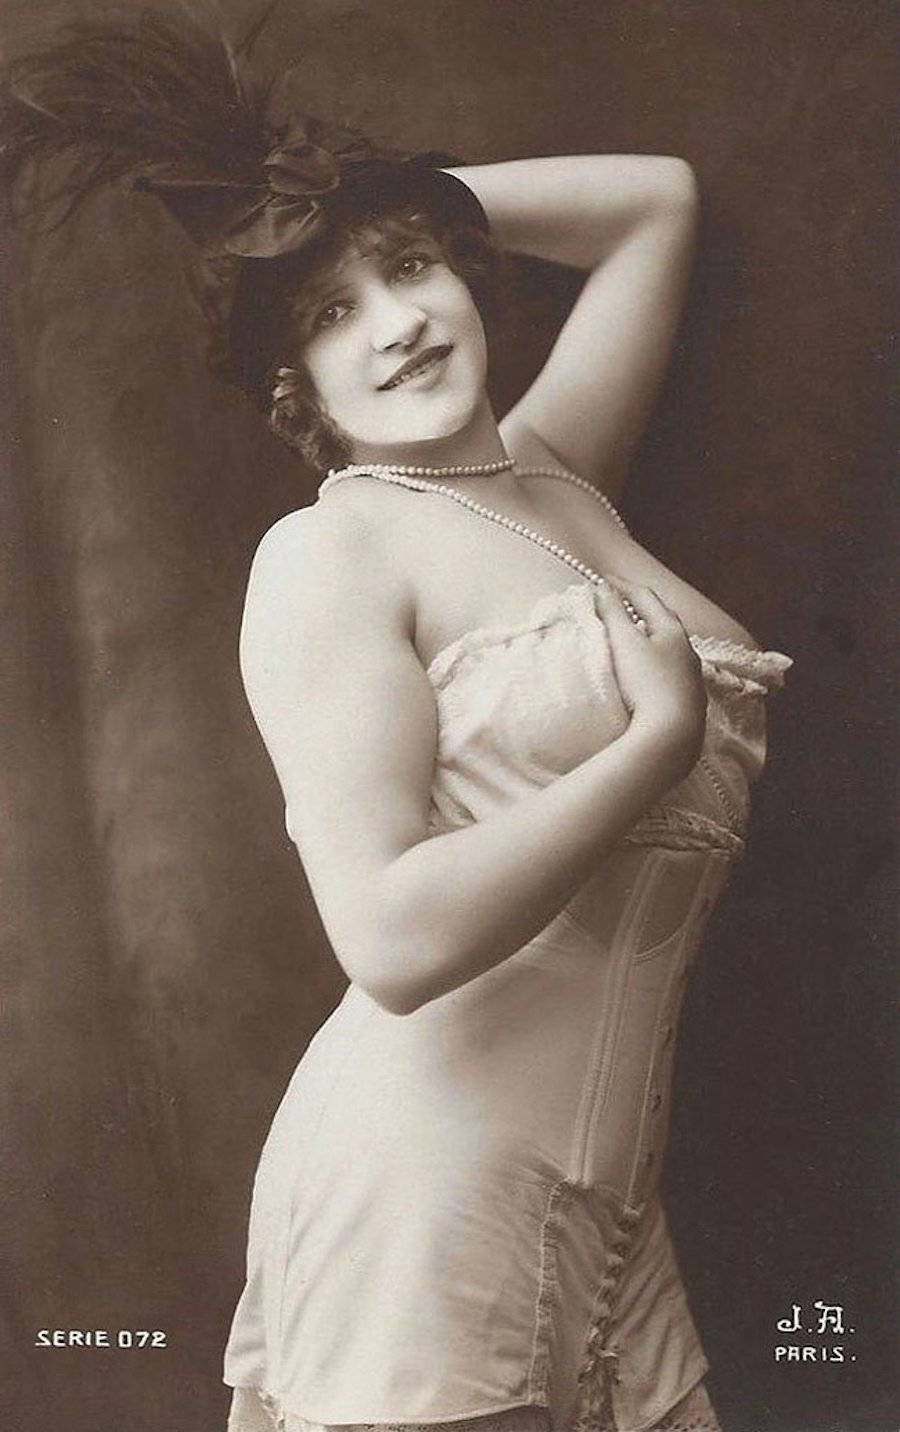 The Beauty of Women Captured 100 Years Ago - Fubiz Media